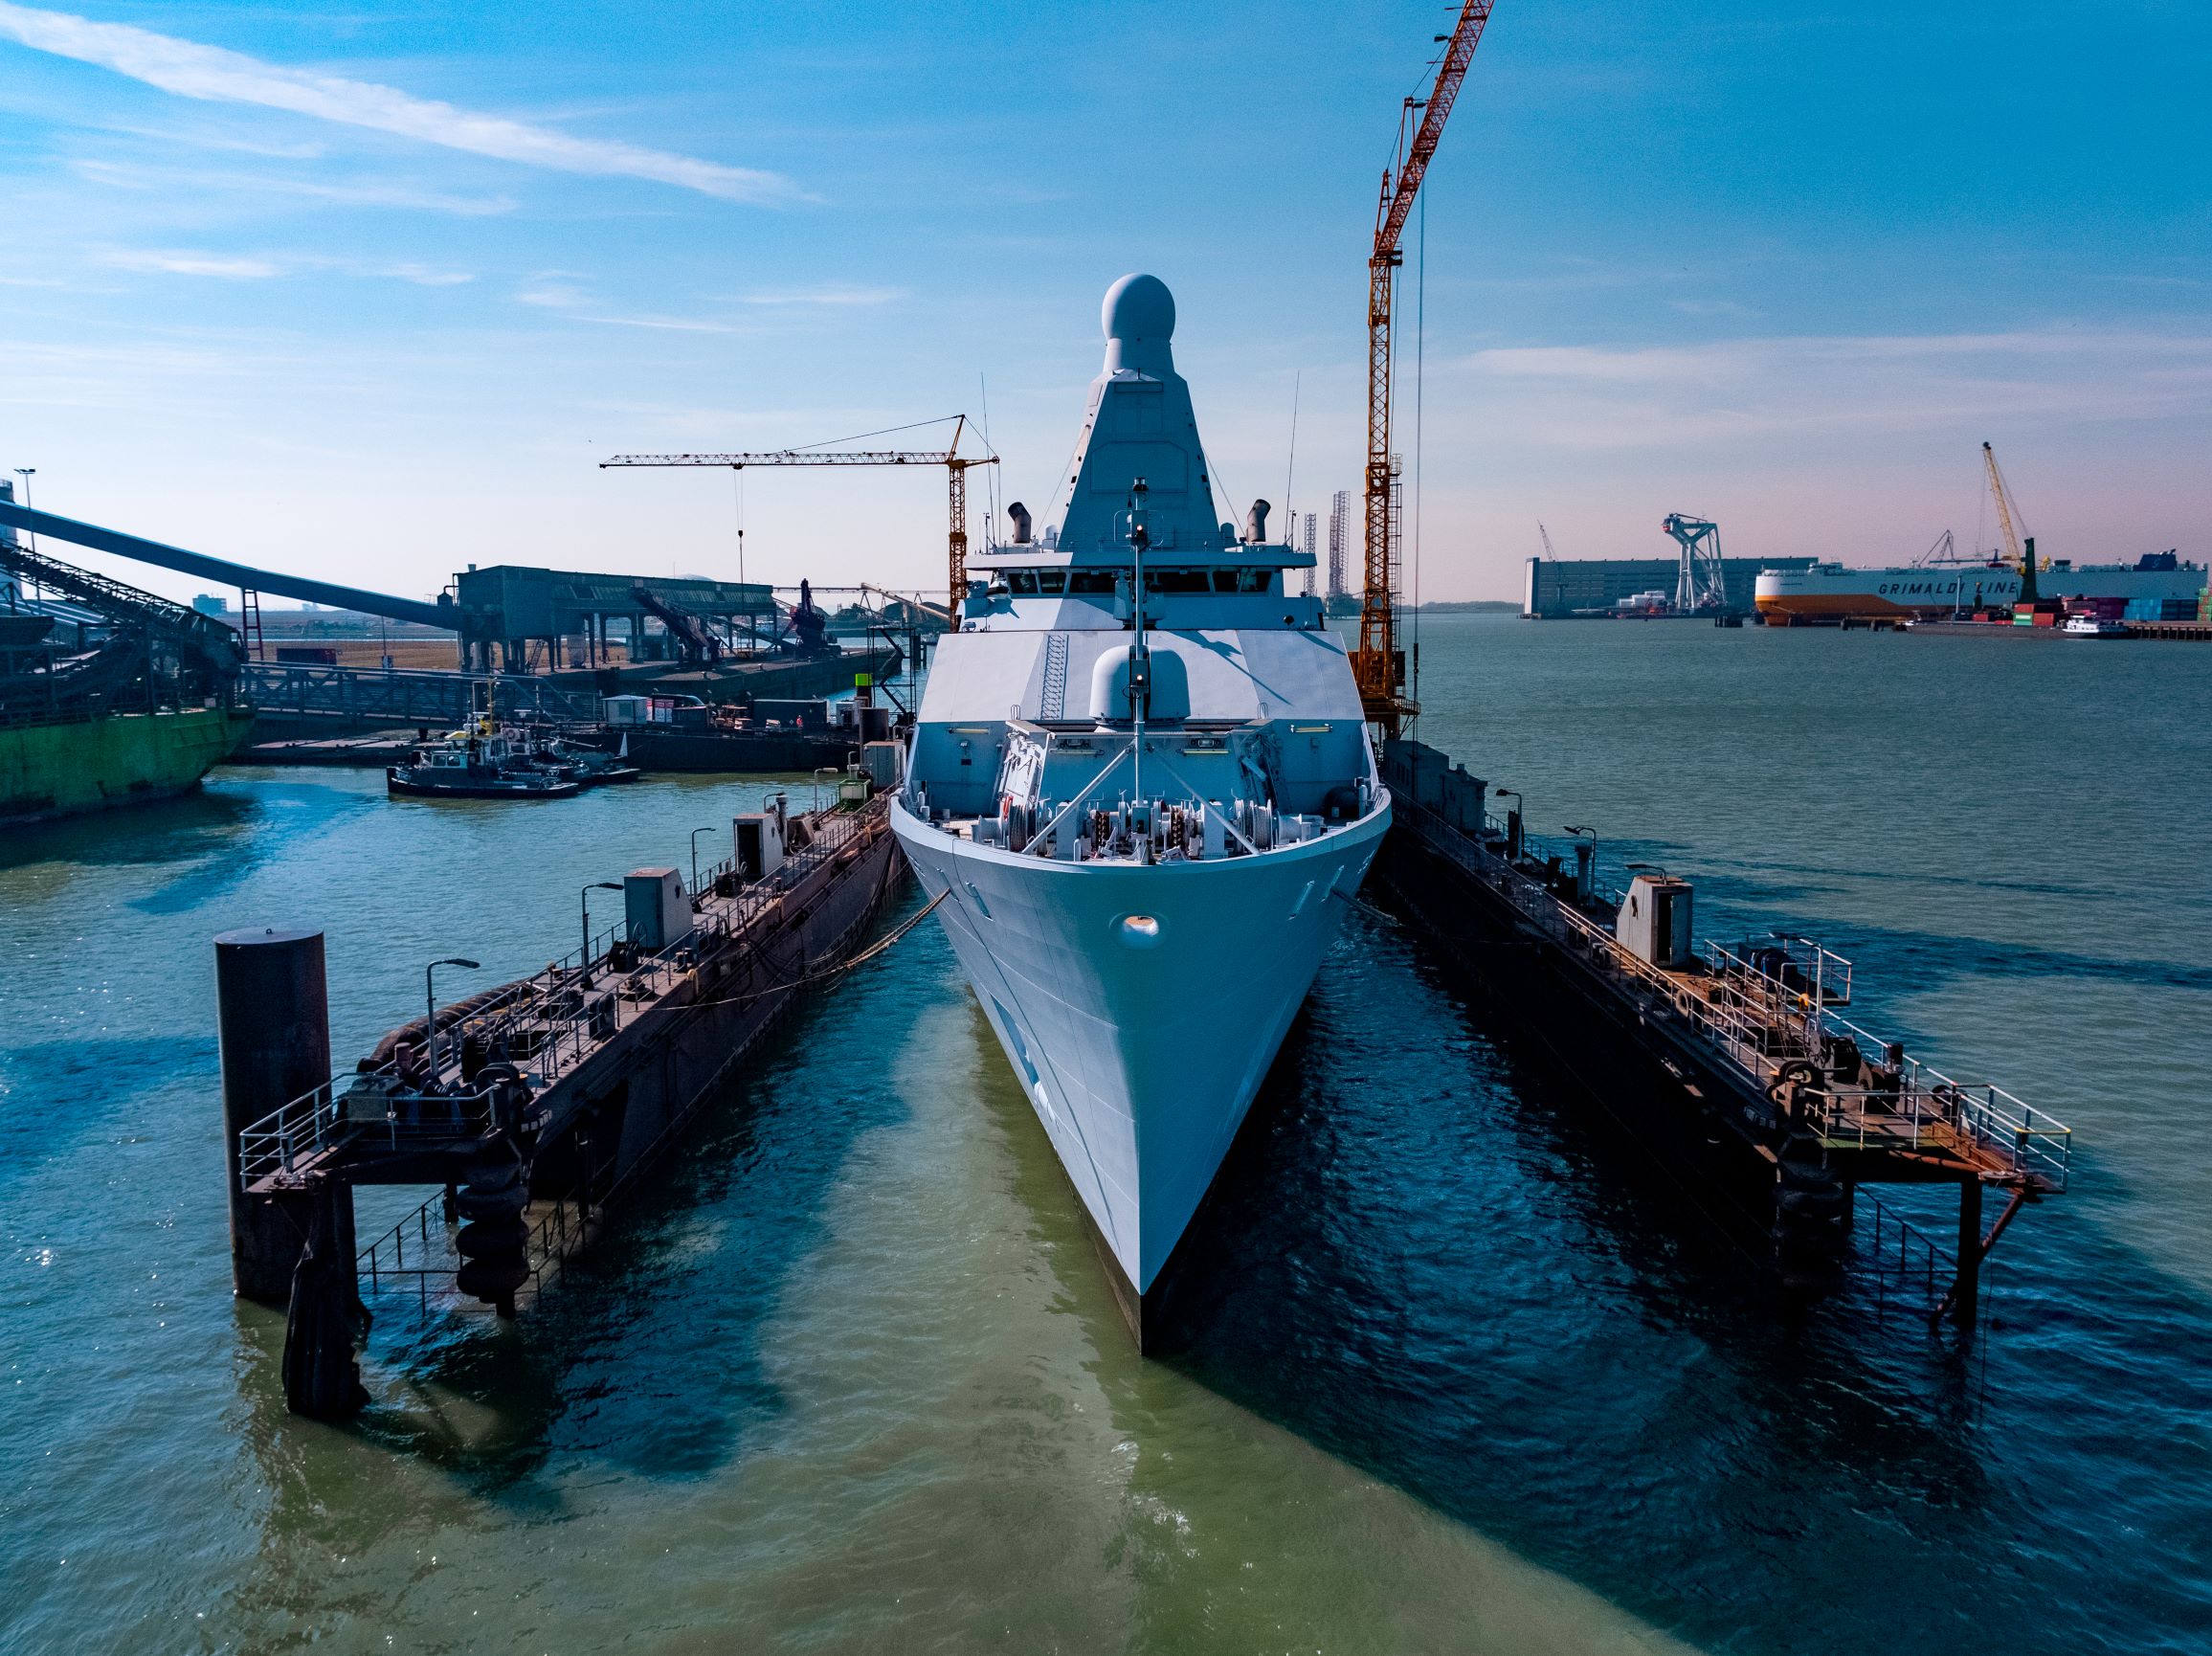 HNLMS Groningen a patrol vessel of the Royal Netherlands Navy in dock 